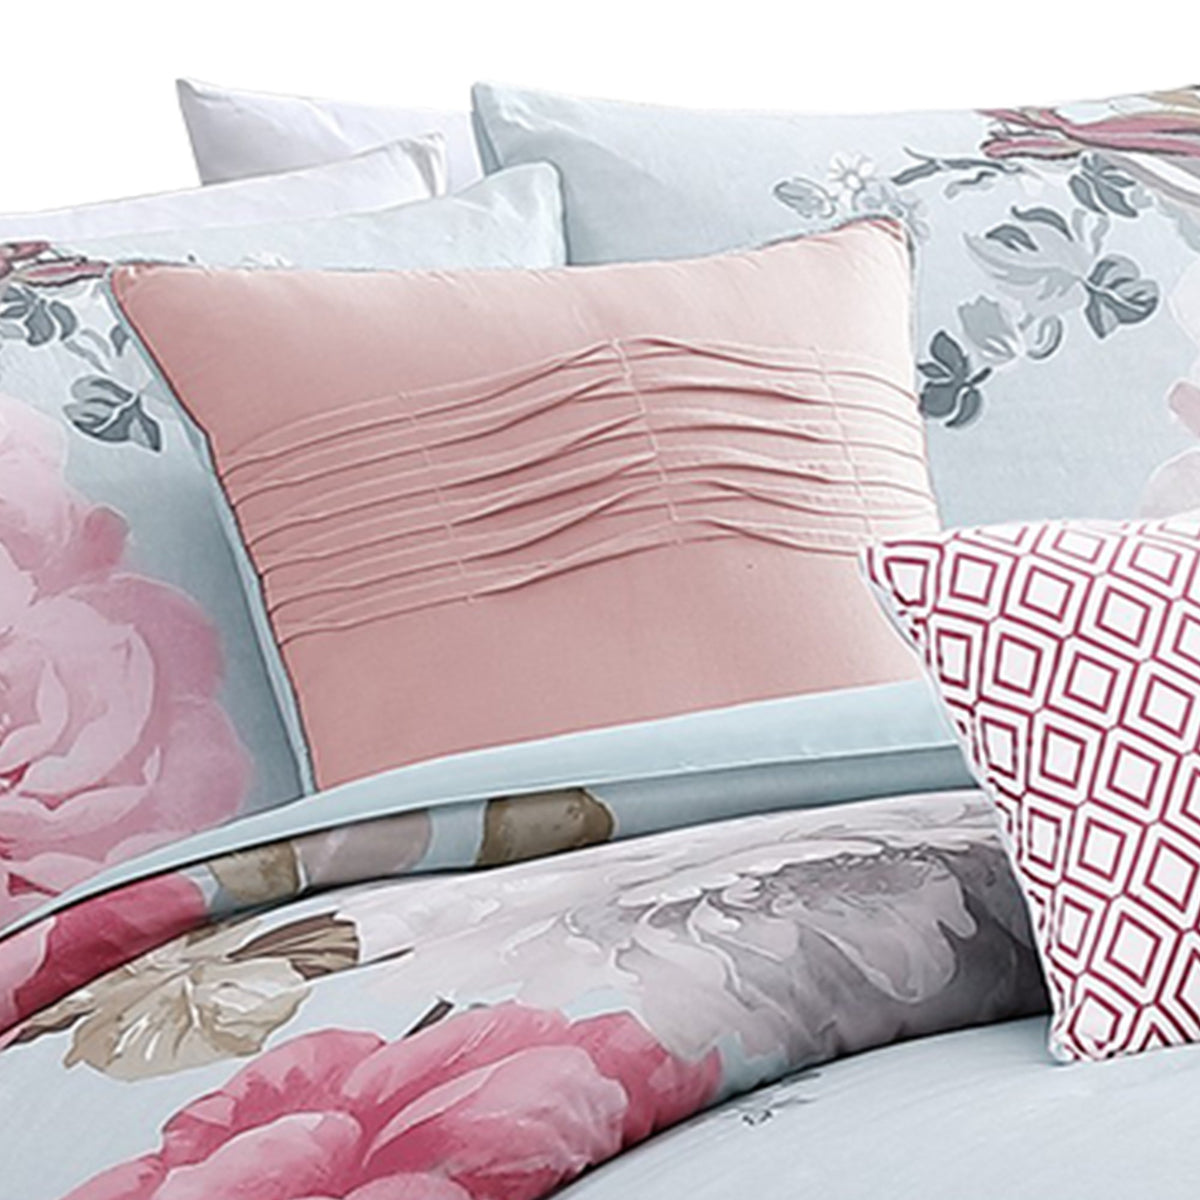 Queen Size 7 Piece Fabric Comforter Set with Floral Prints, Multicolor - BM225194